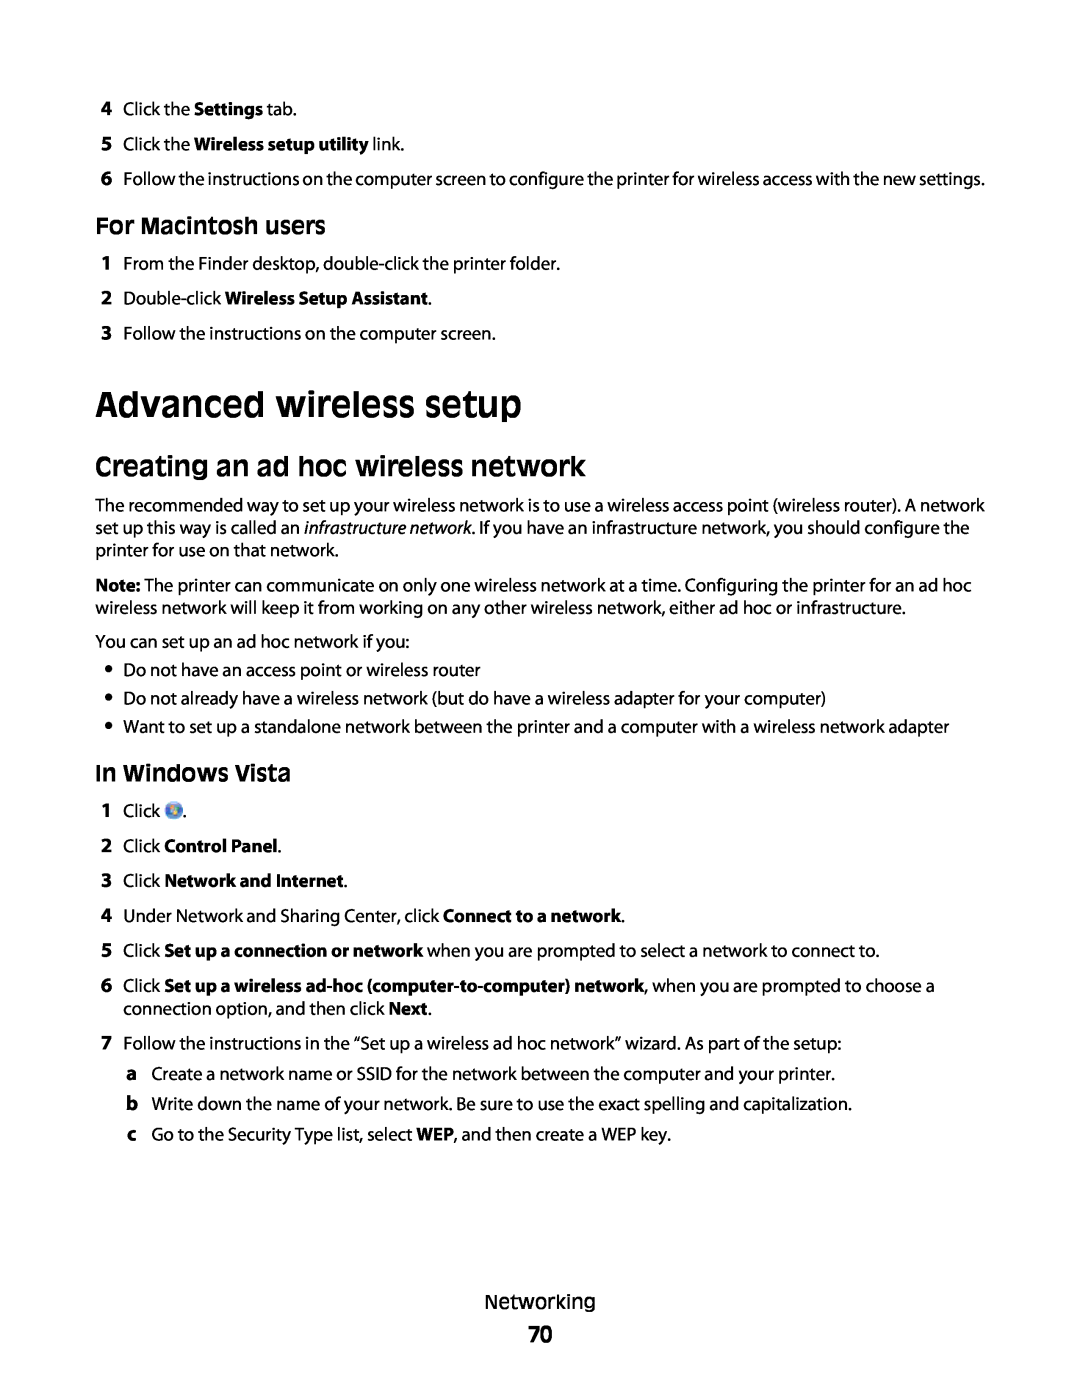 Lexmark 30E, S500, 301 Advanced wireless setup, Creating an ad hoc wireless network, In Windows Vista, For Macintosh users 